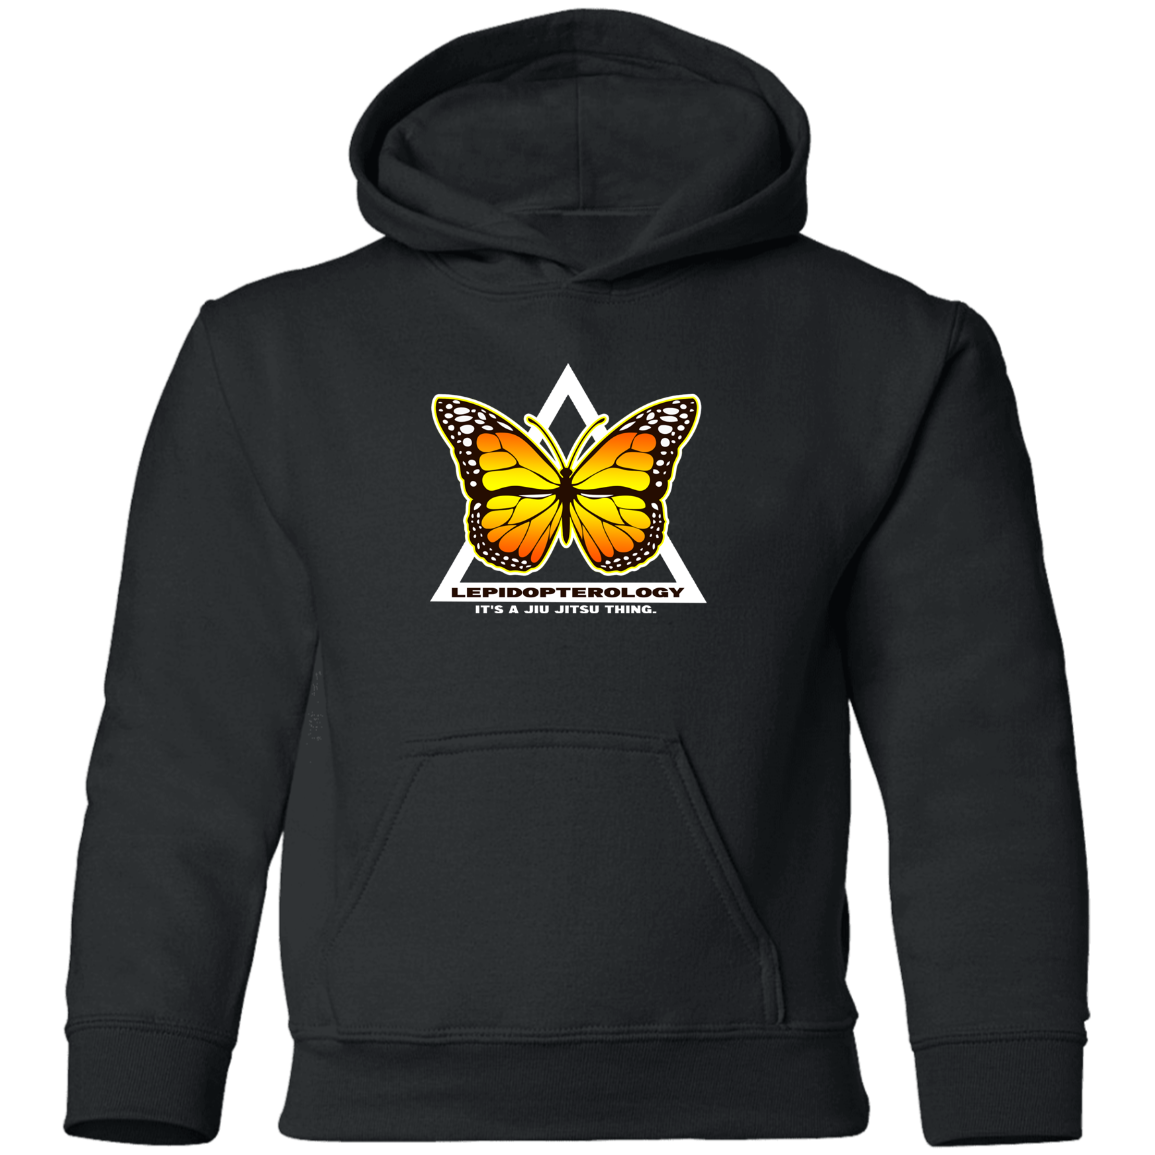 Artichoke Fight Gear Custom Design #6. Lepidopterology (Study of butterflies). Butterfly Guard. Youth Pullover Hoodie